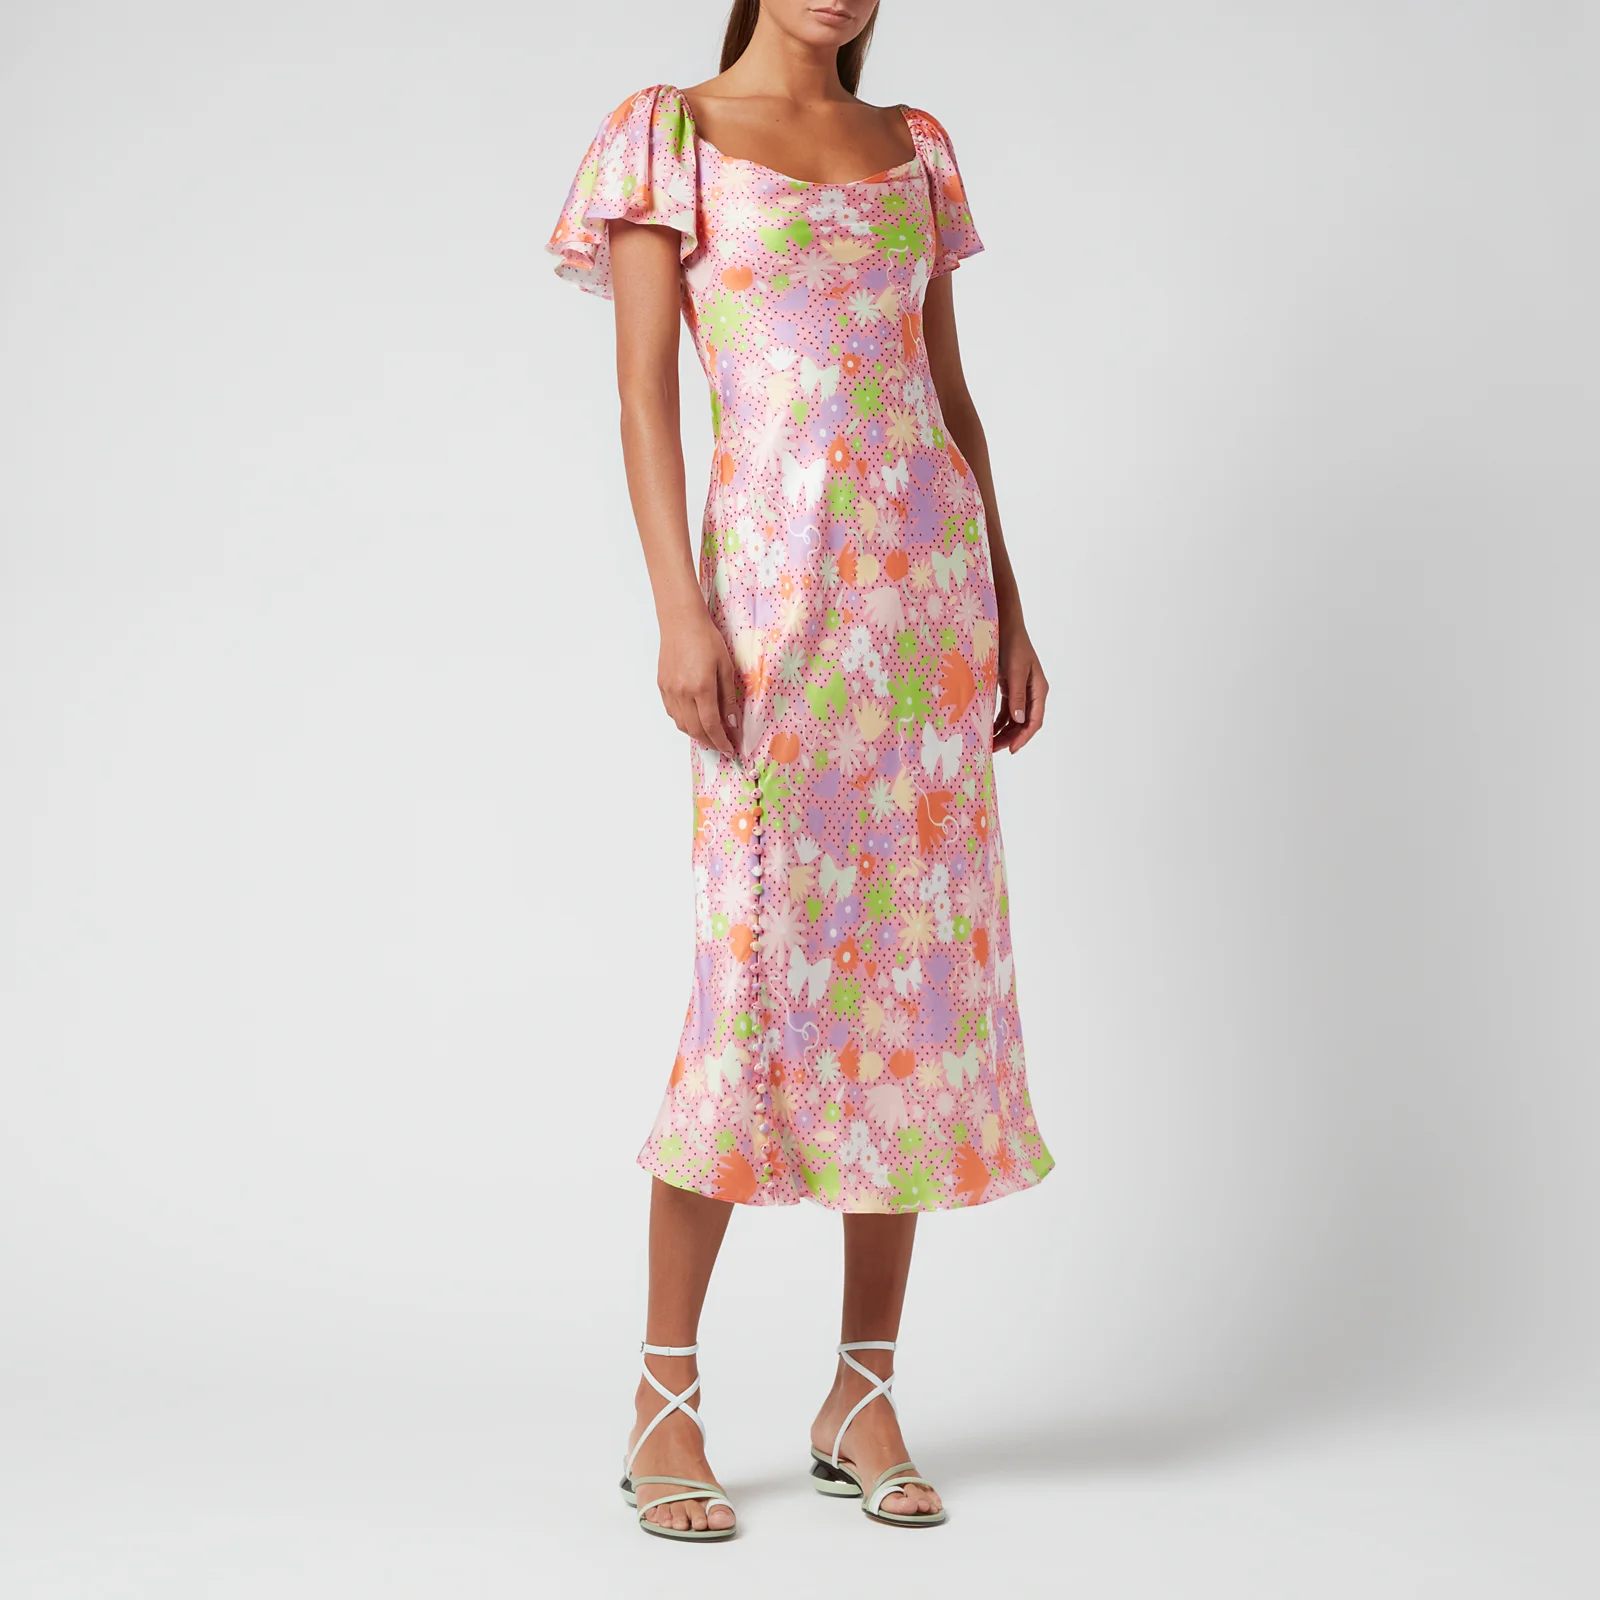 Olivia Rubin Women's Amelia Dress - Polka Dot Floral Image 1